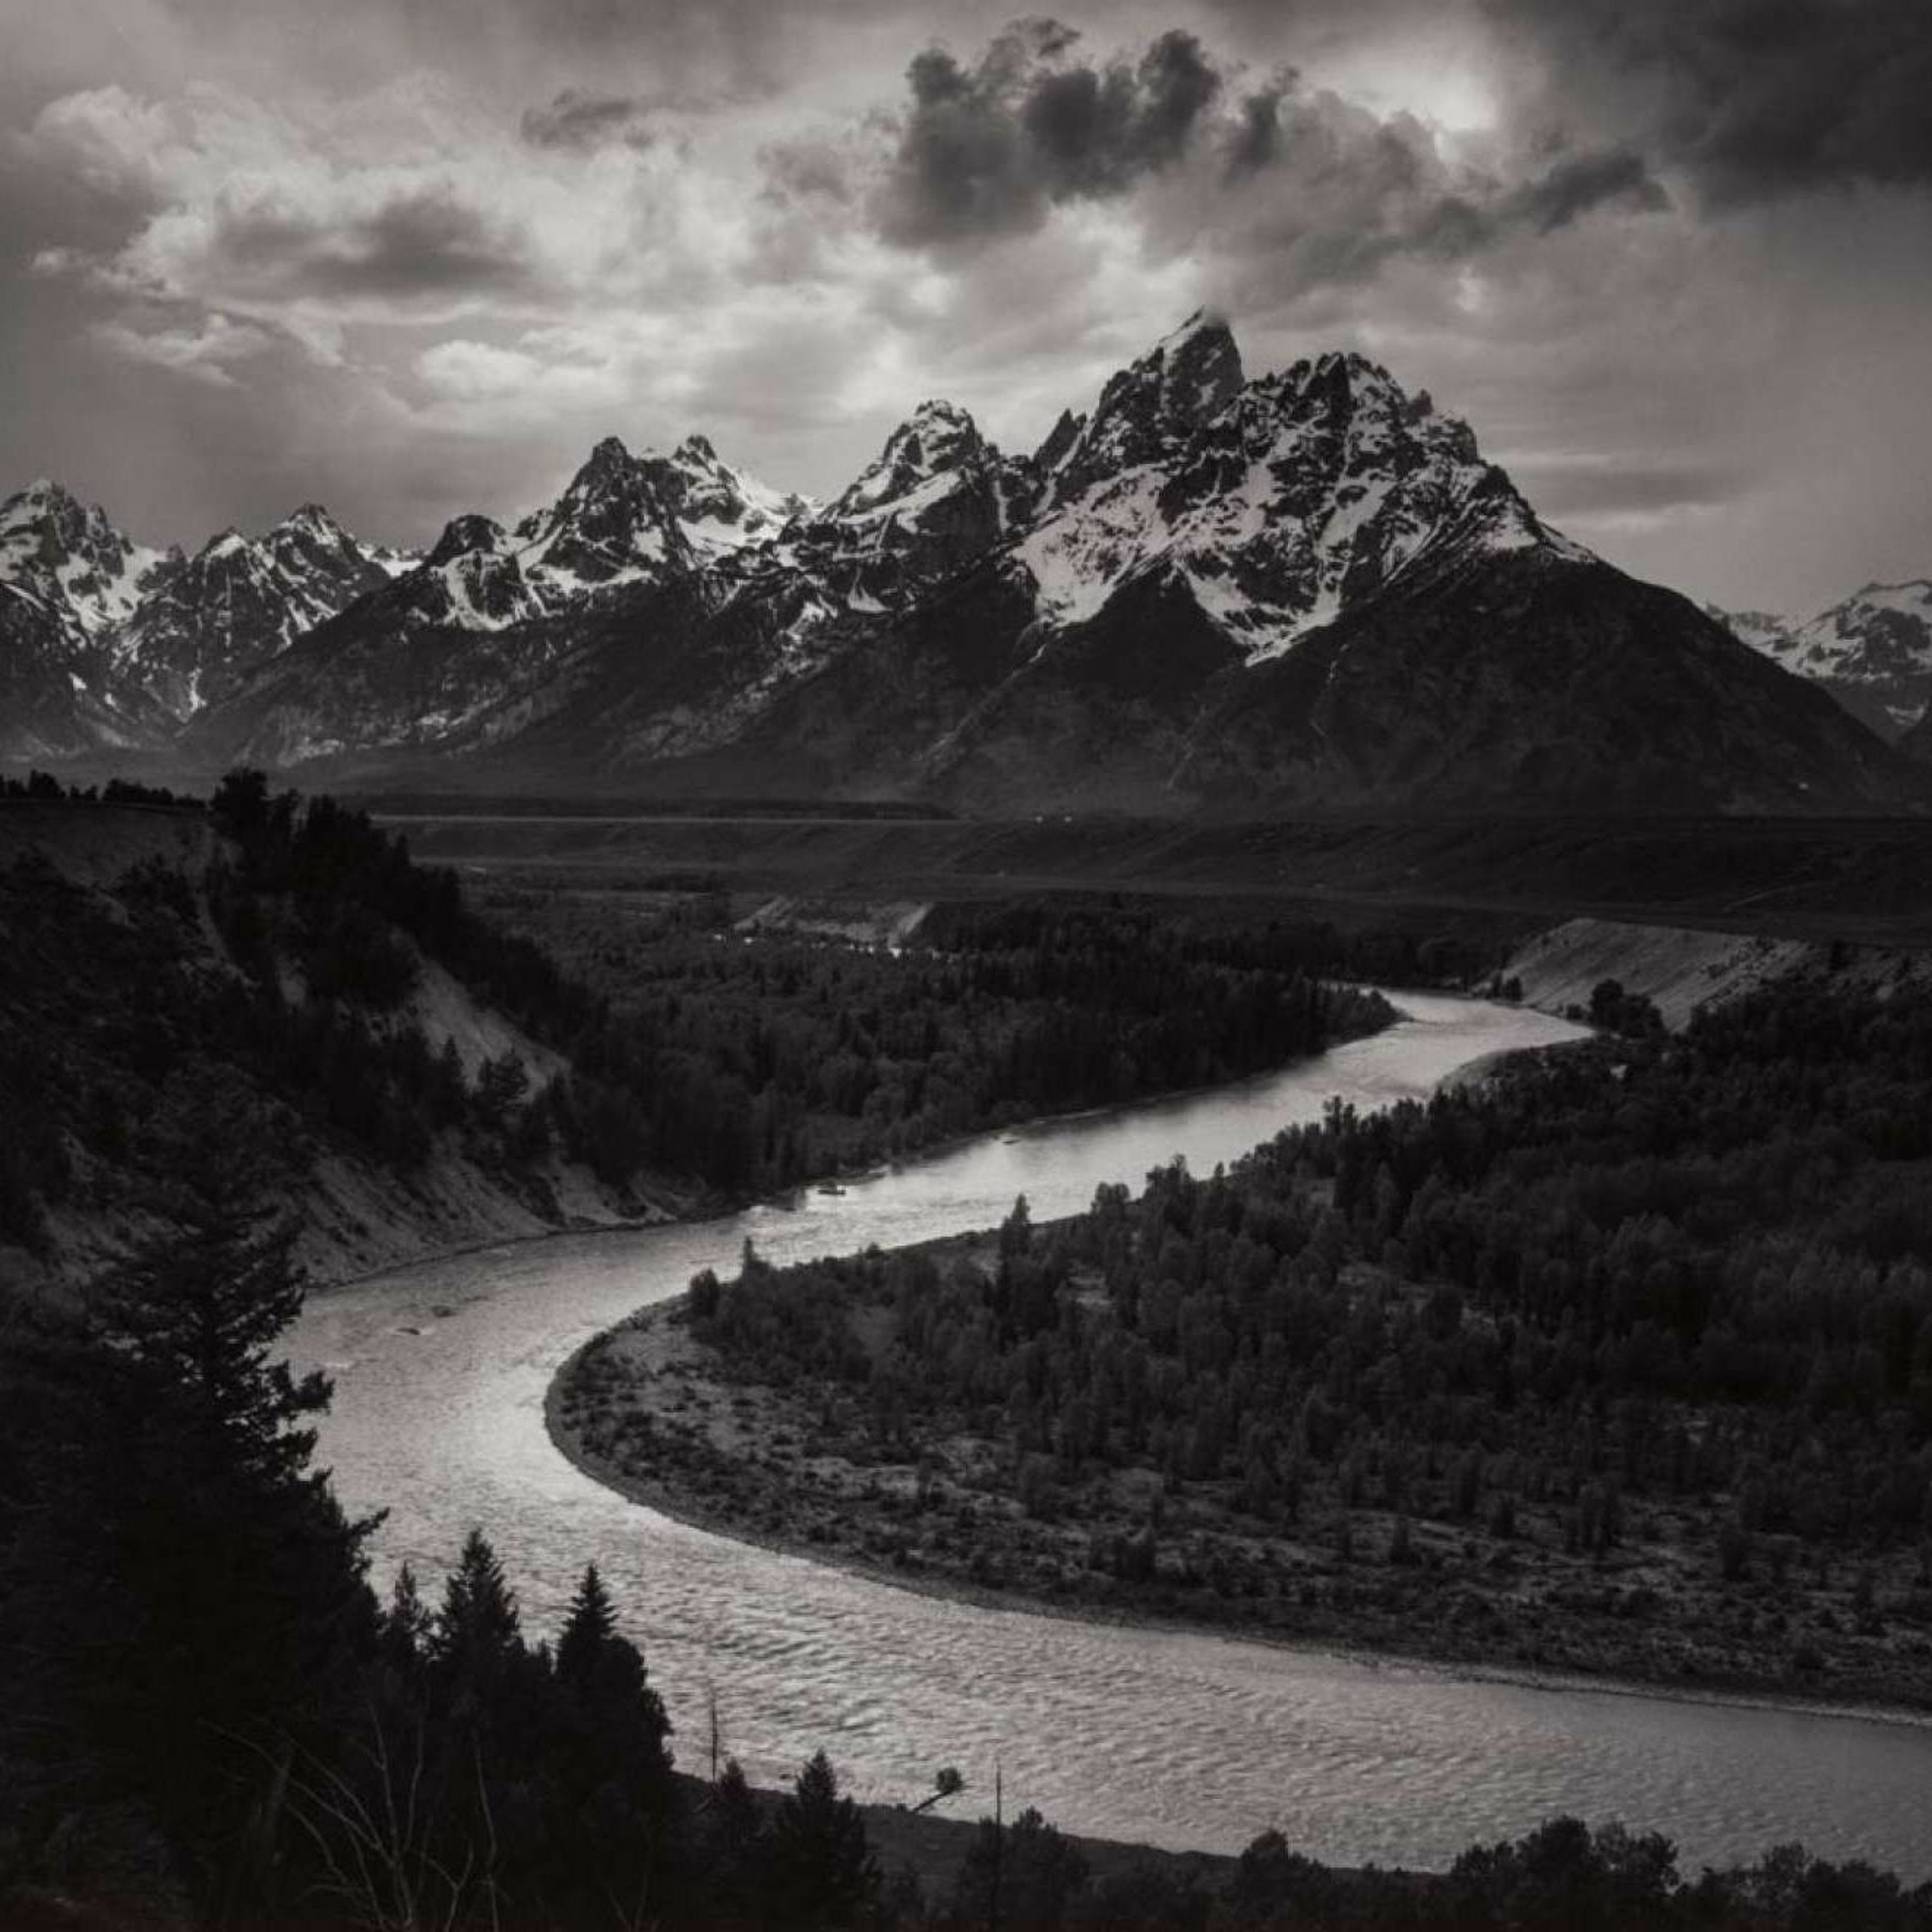 Ep. 37 - Ansel Adams’ ”The Tetons and Snake River, Grand Teton National Park, Wyoming” (1942)